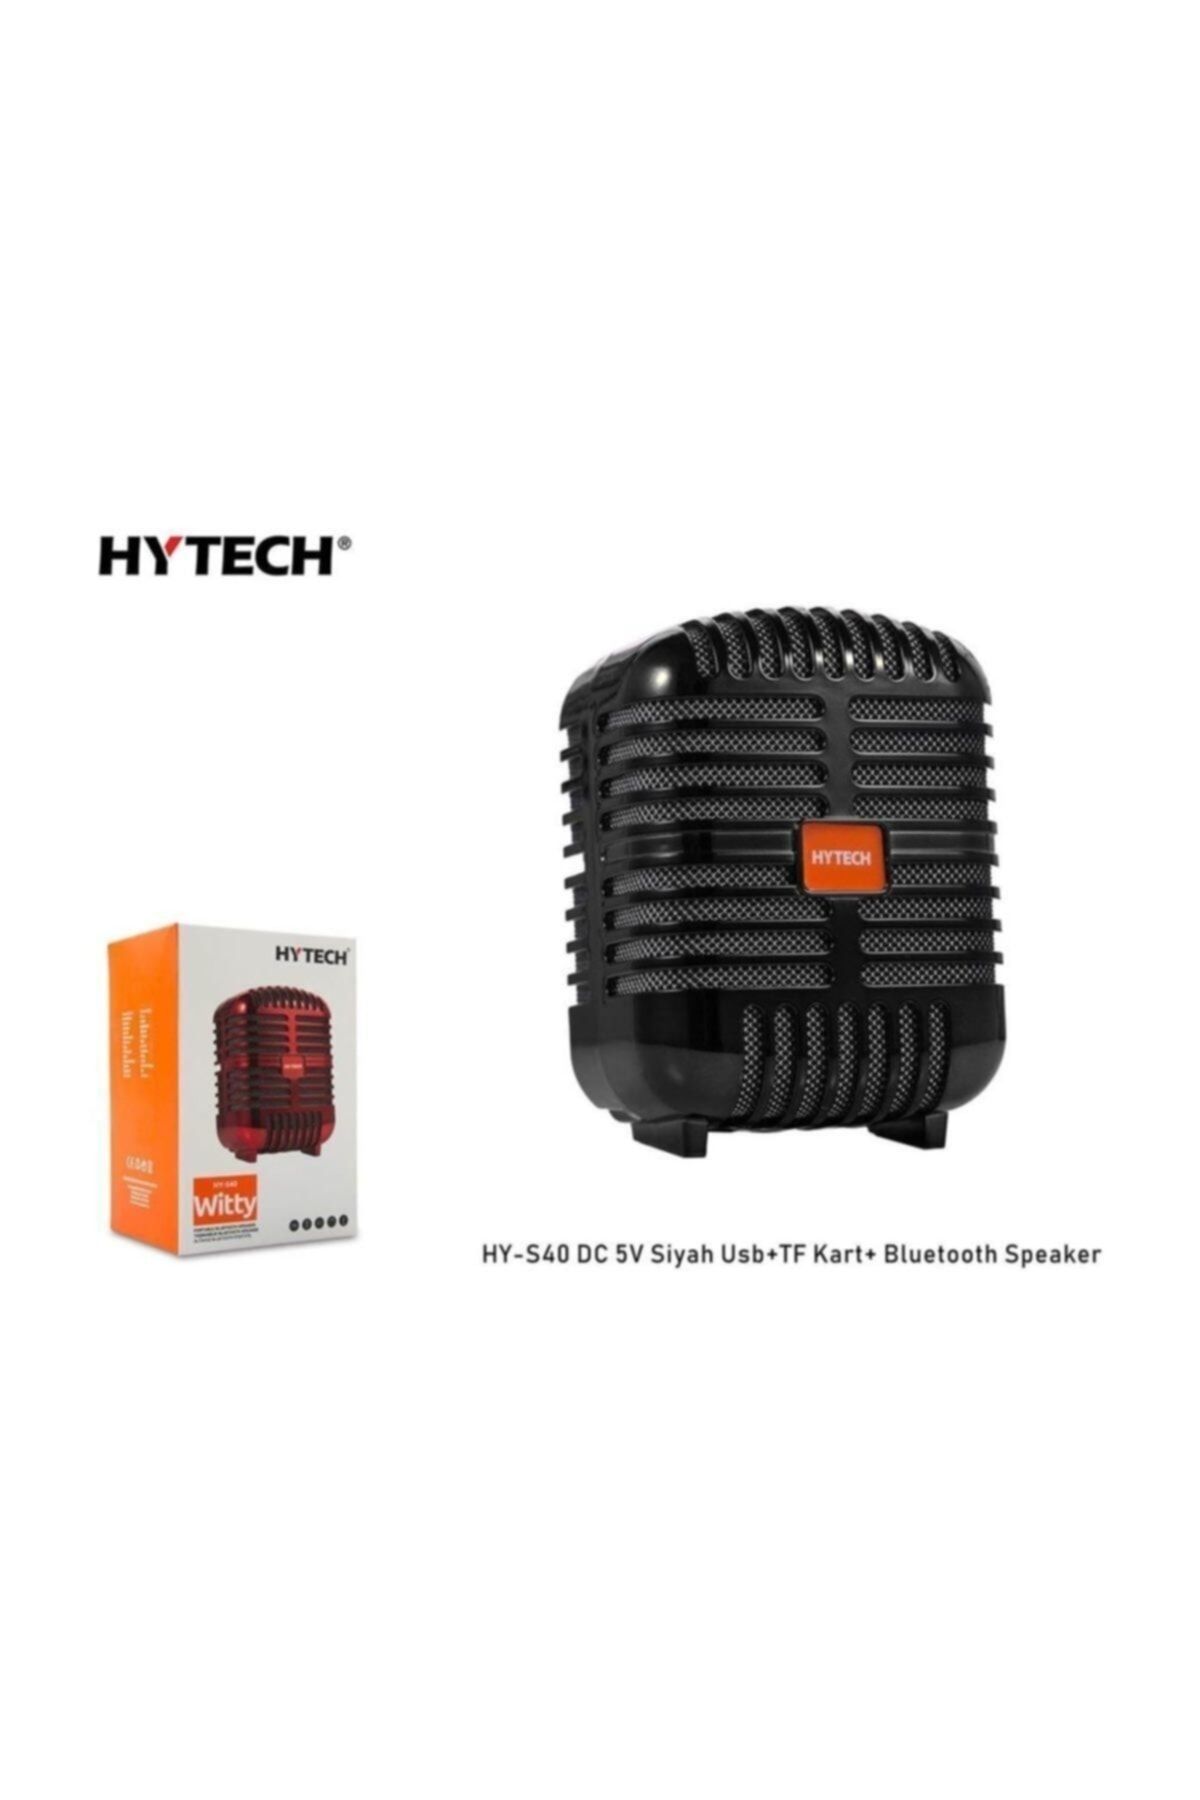 Hytech Hy-s40 Dc 5v Bluetooth Speaker Siyah